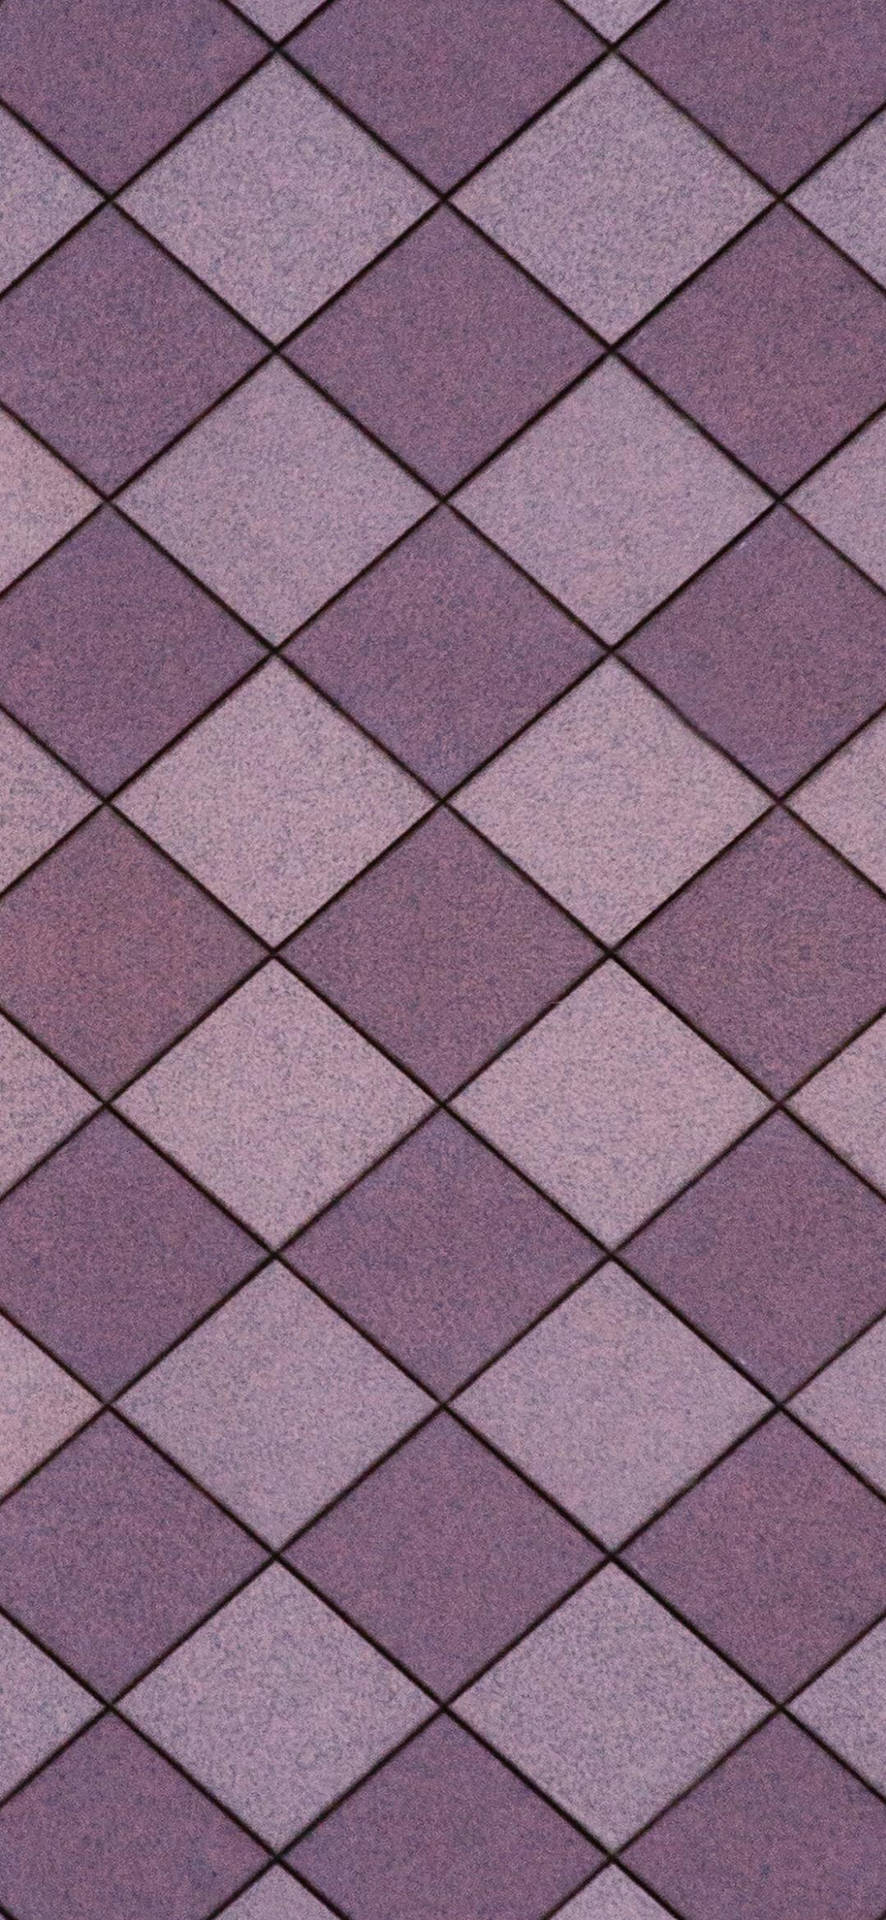 Whatsapp Chat Purple Tiles Background